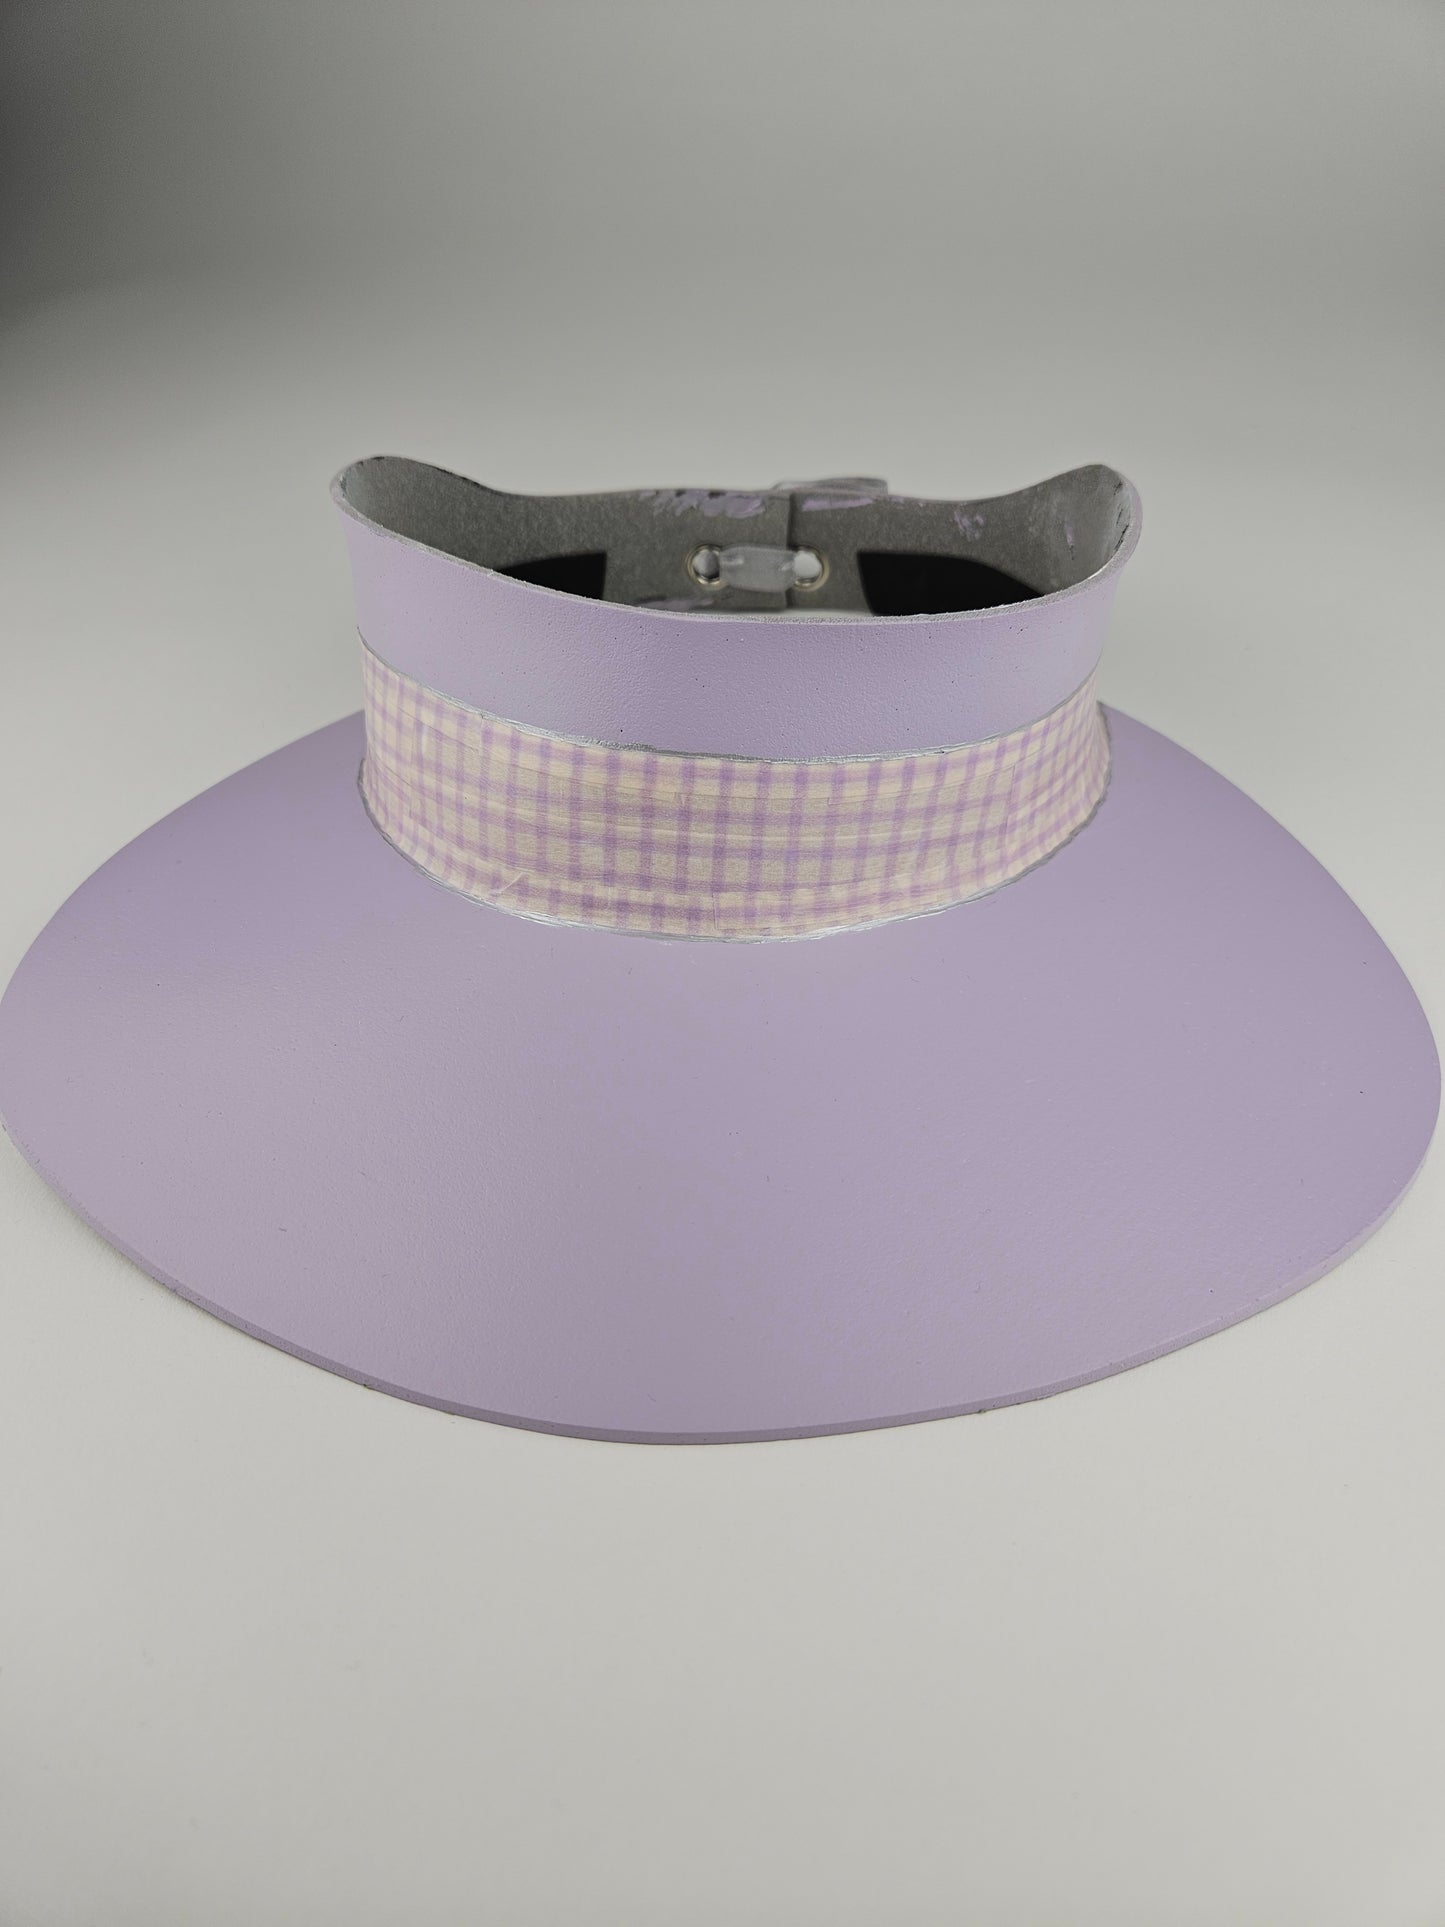 Lilac Purple Audrey Sun Visor Hat with Elegant Plaid Style Lilac Band: 1950s, Walks, Brunch, Asian, Golf, Summer, Church, No Headache, Pool, Beach